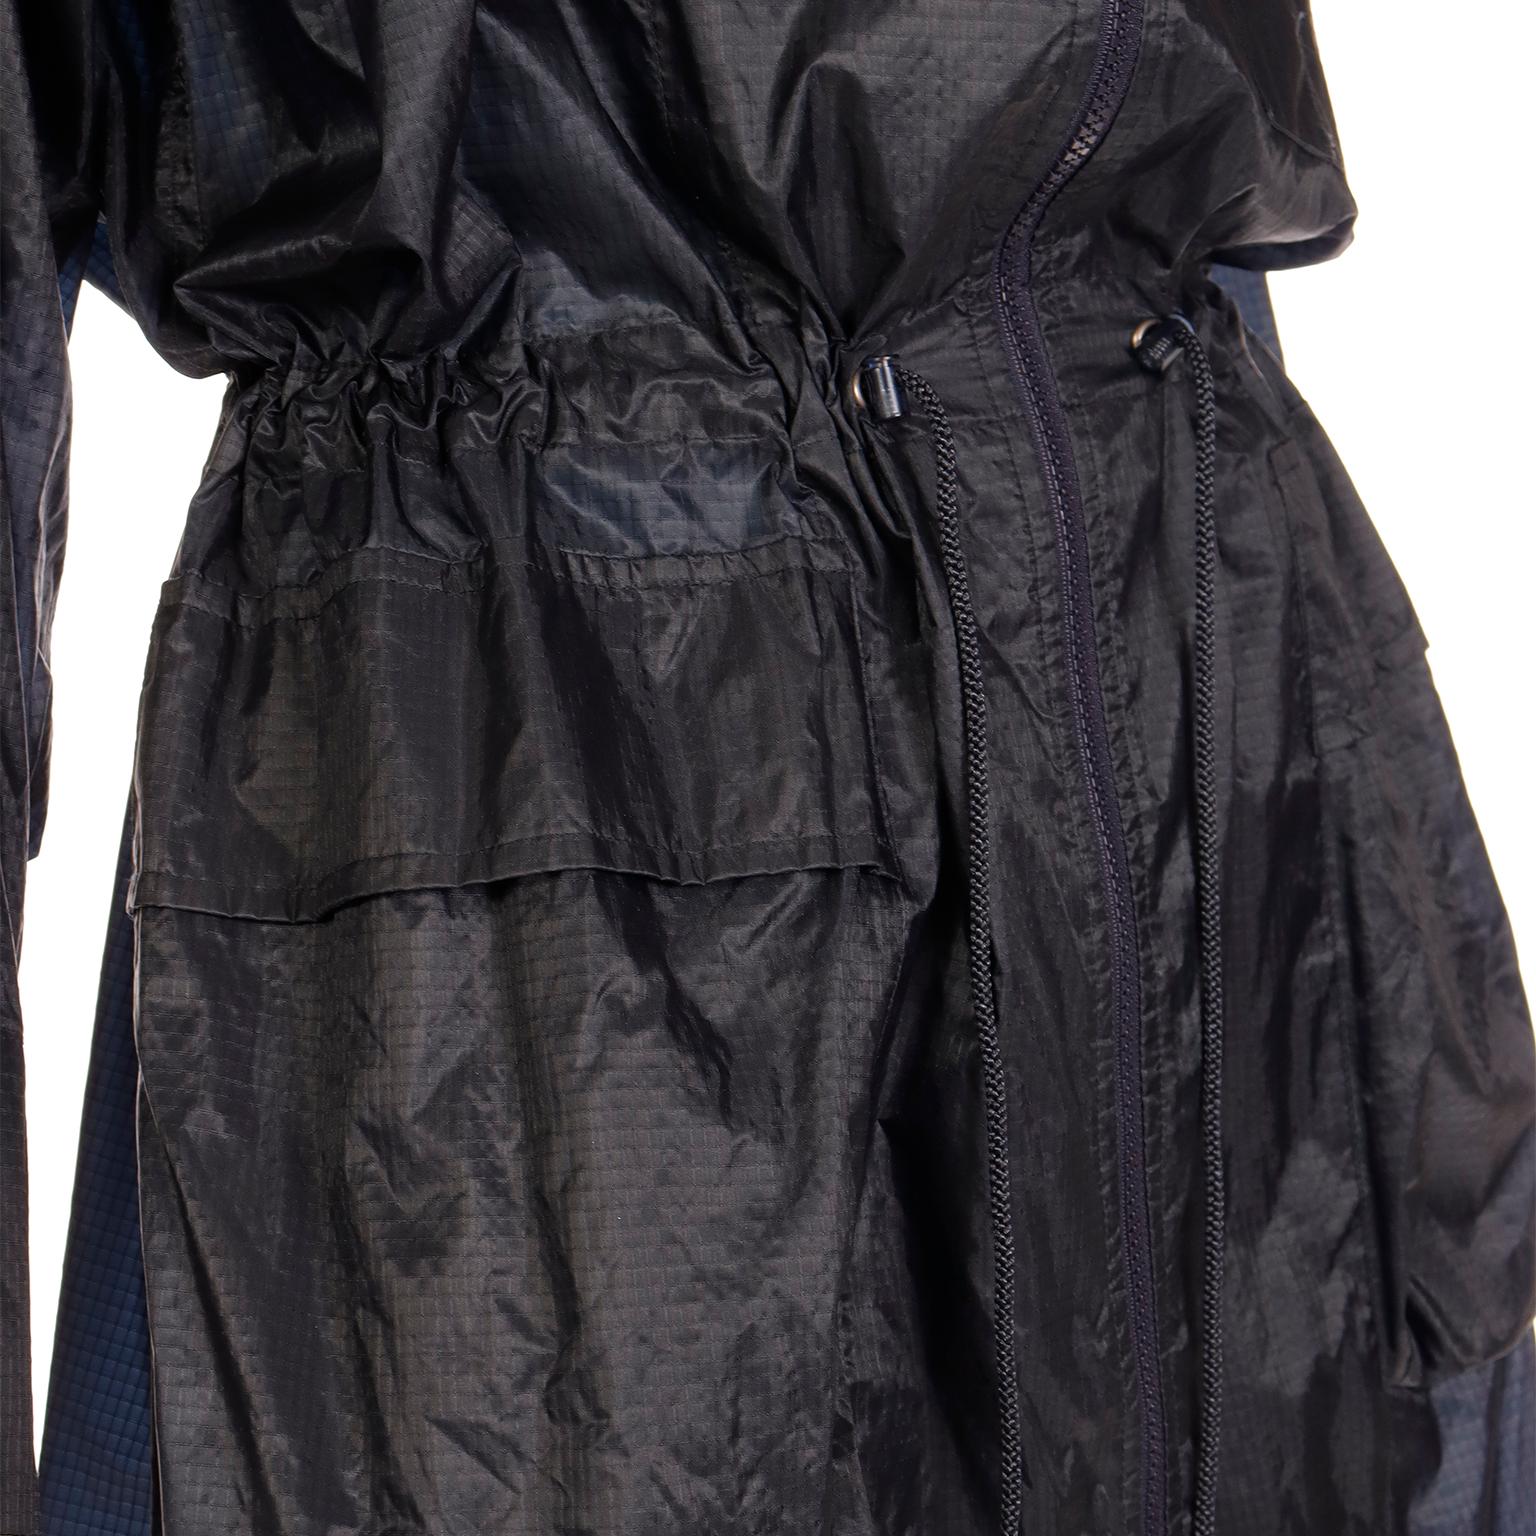 Issey Miyake - Manteau vintage à capuche converti en sac, années 1990 5